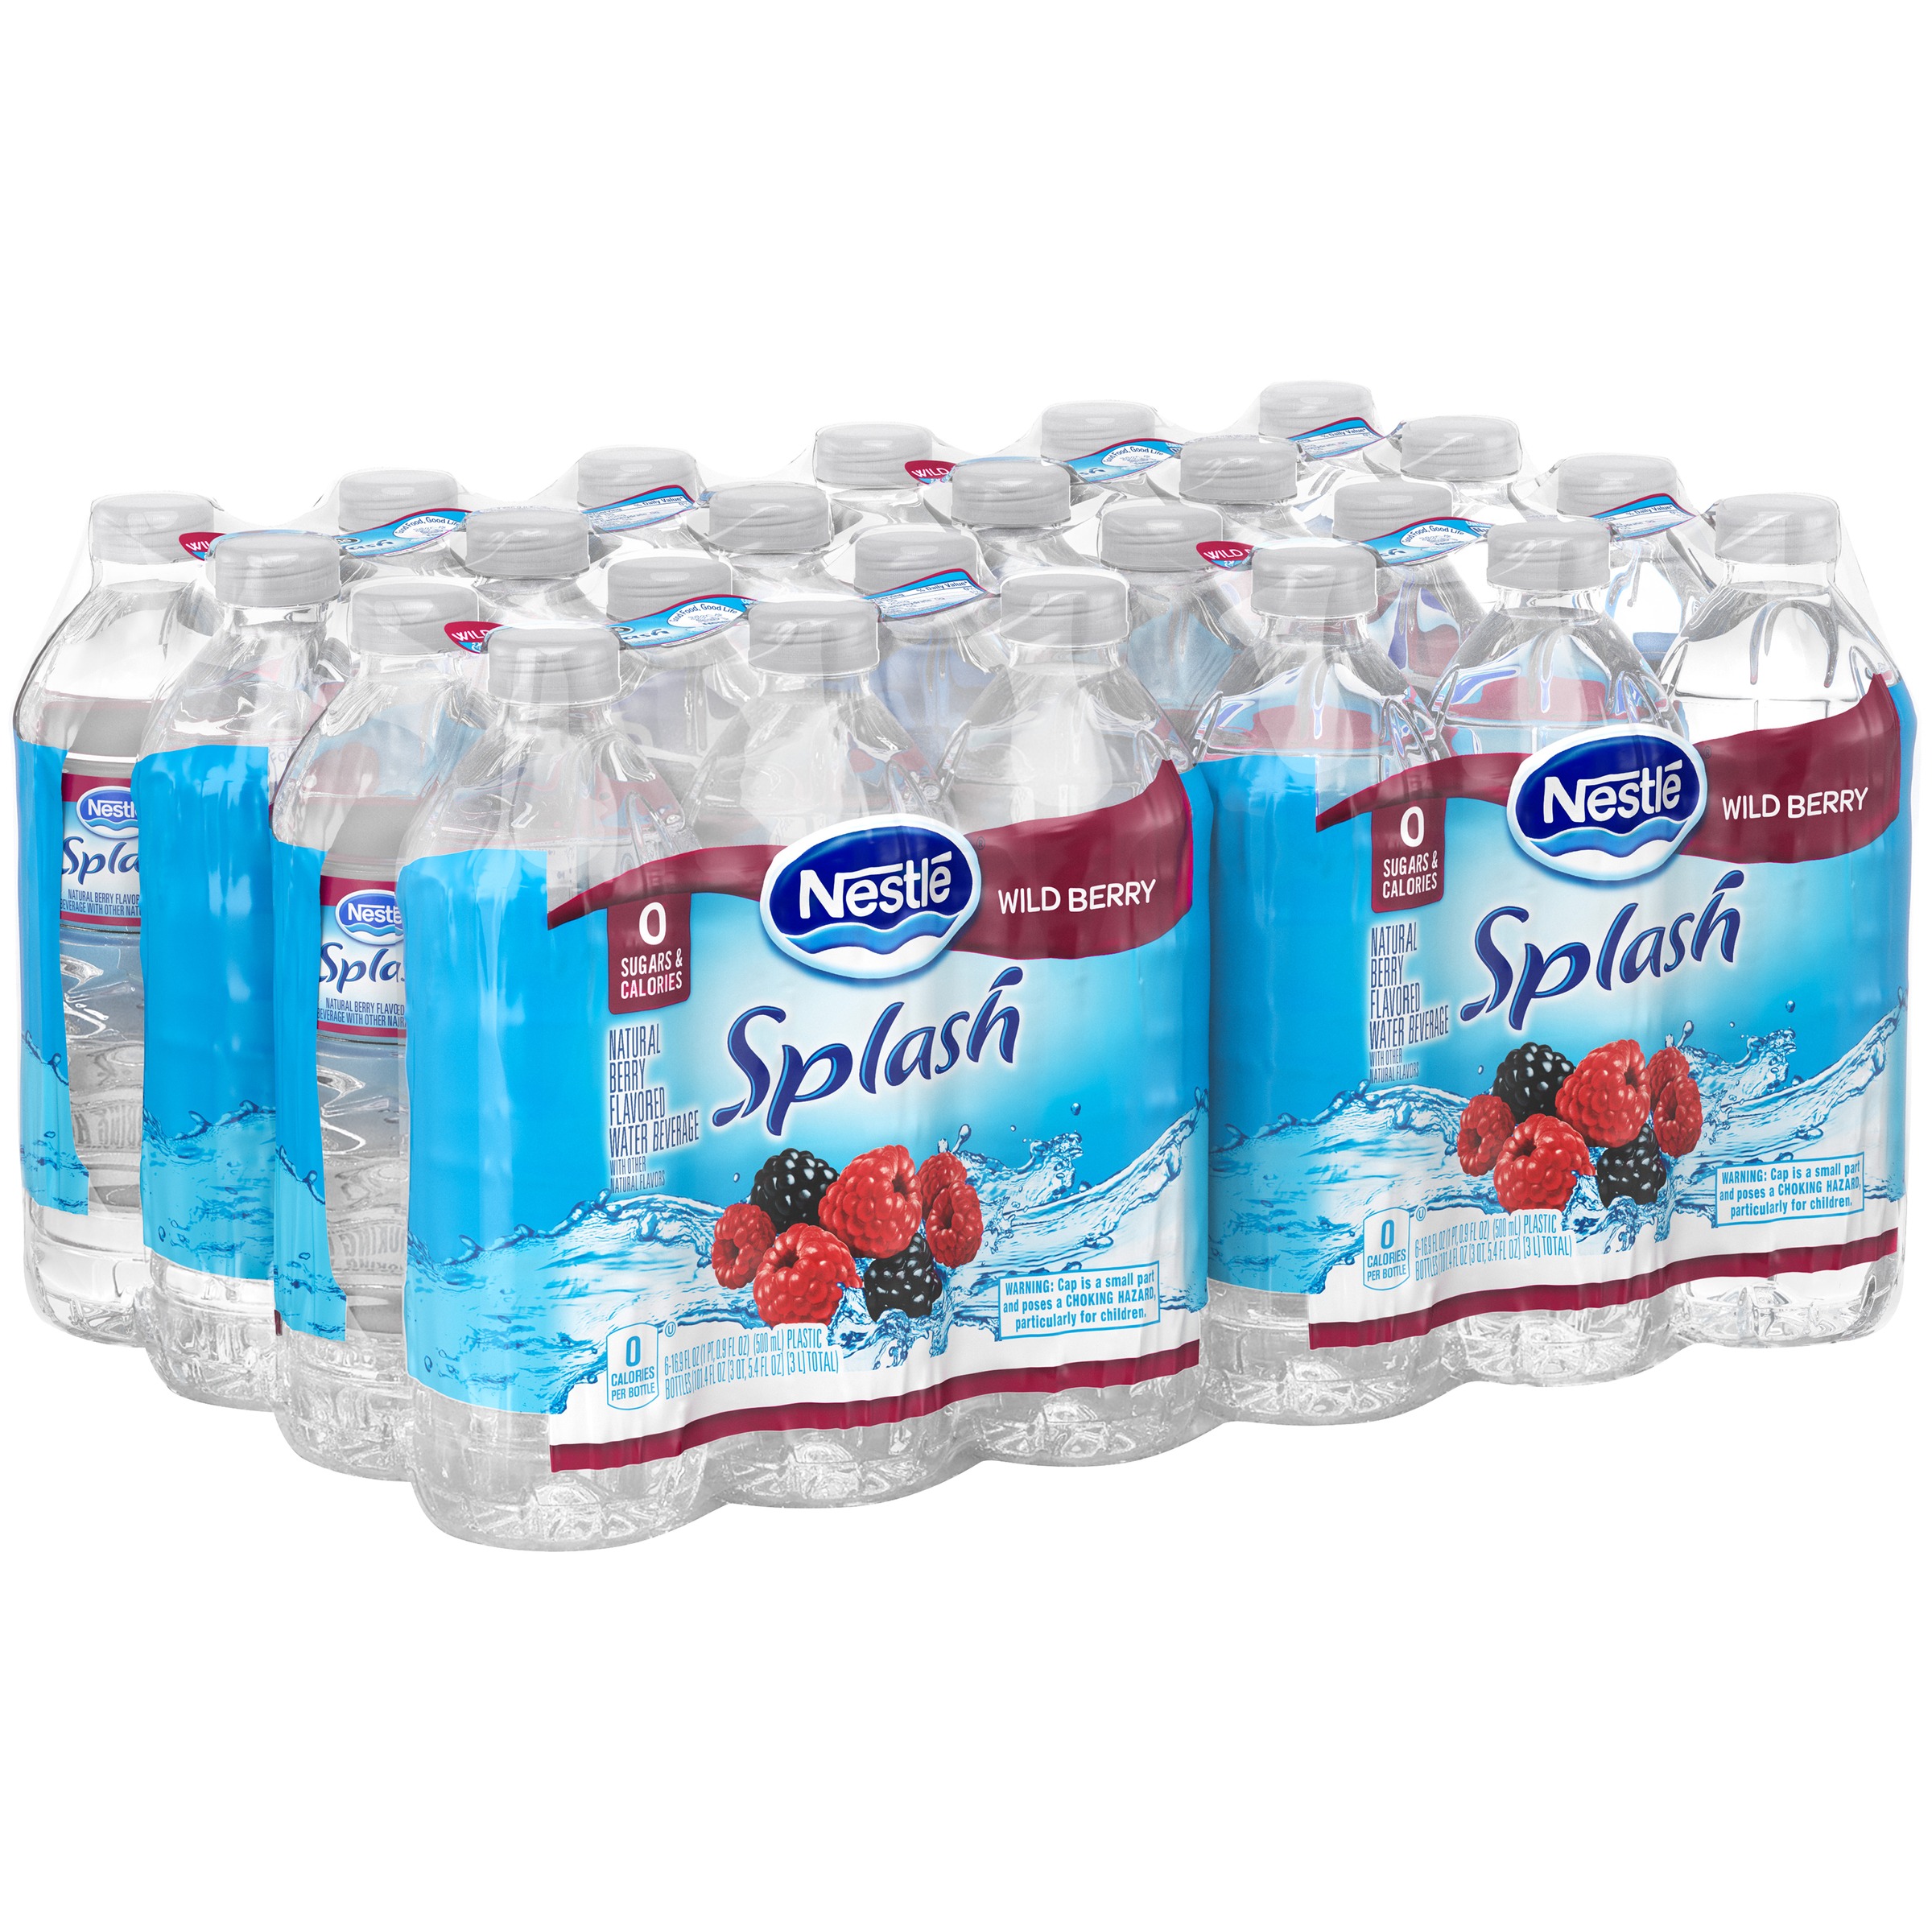 Flavored water bottle brands